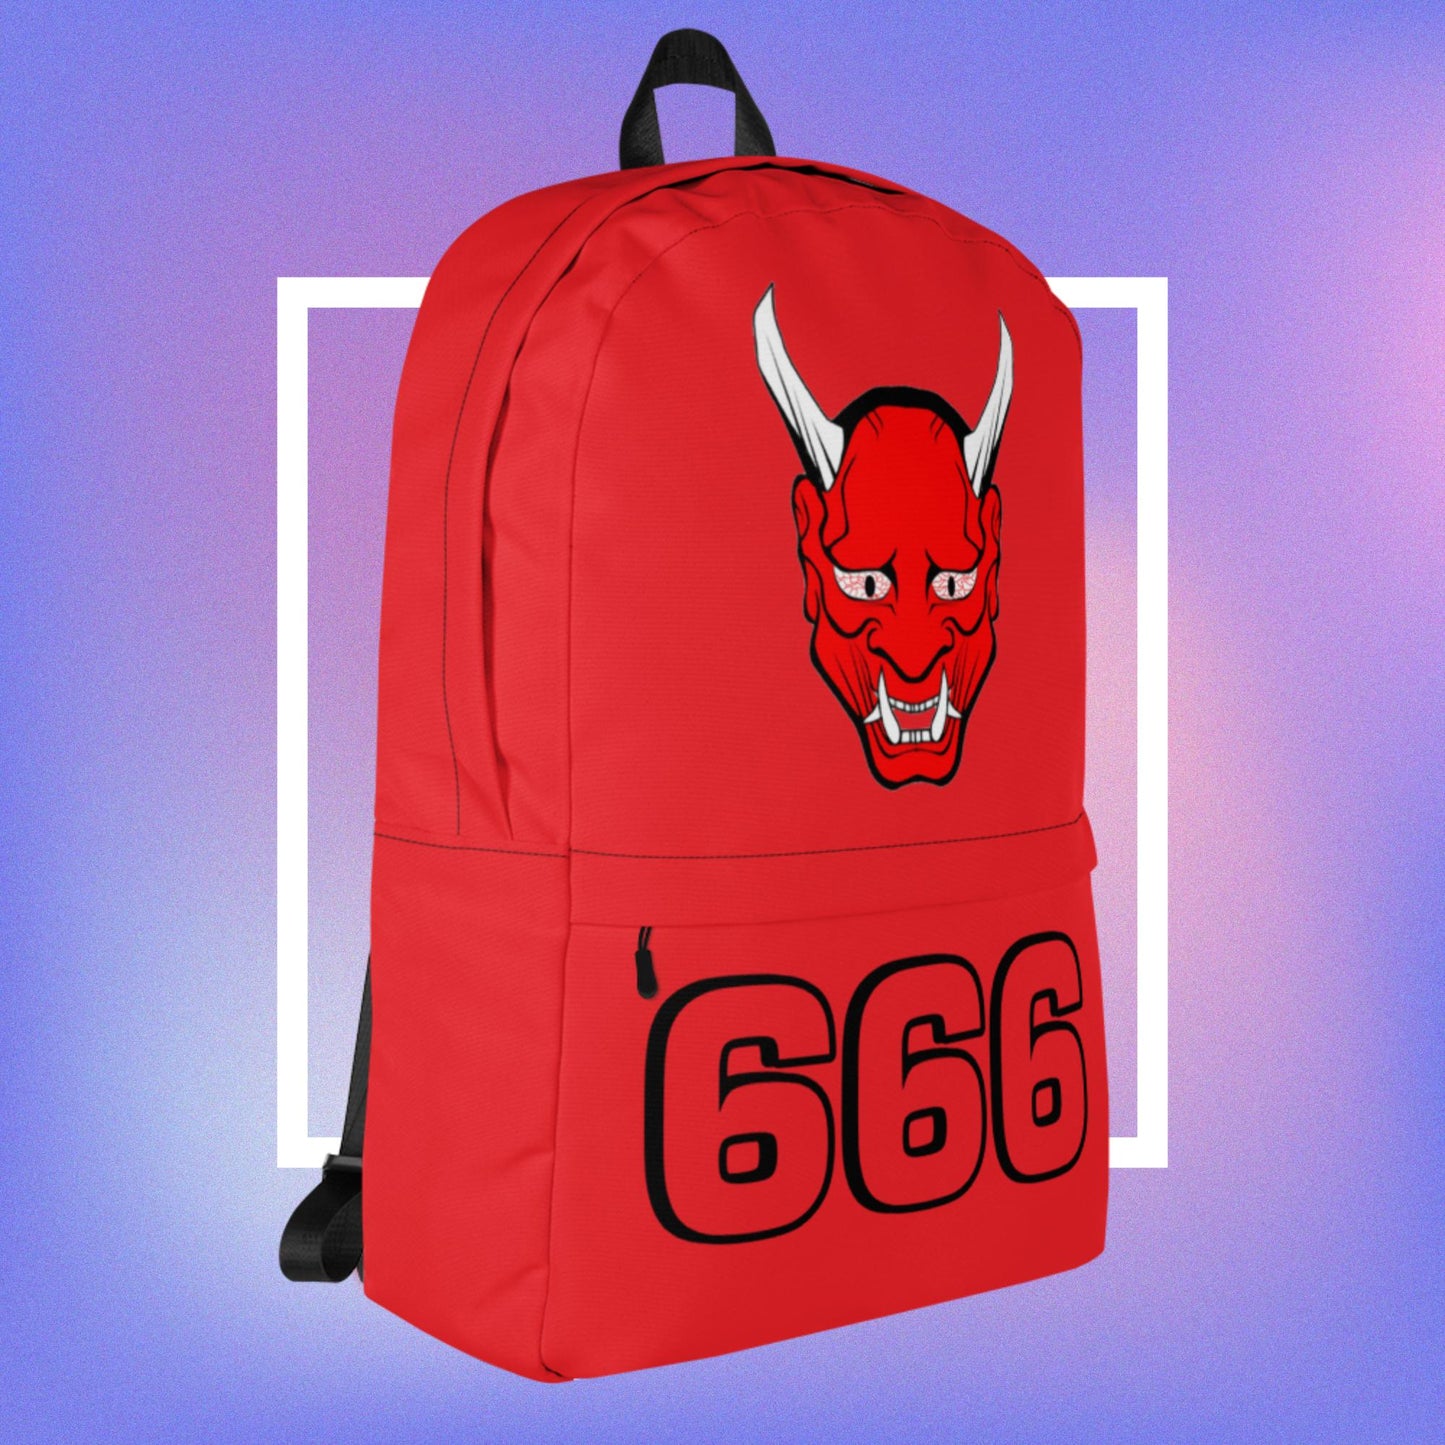 LORD SATAN 666 Red Backpack - Lizard Vigilante